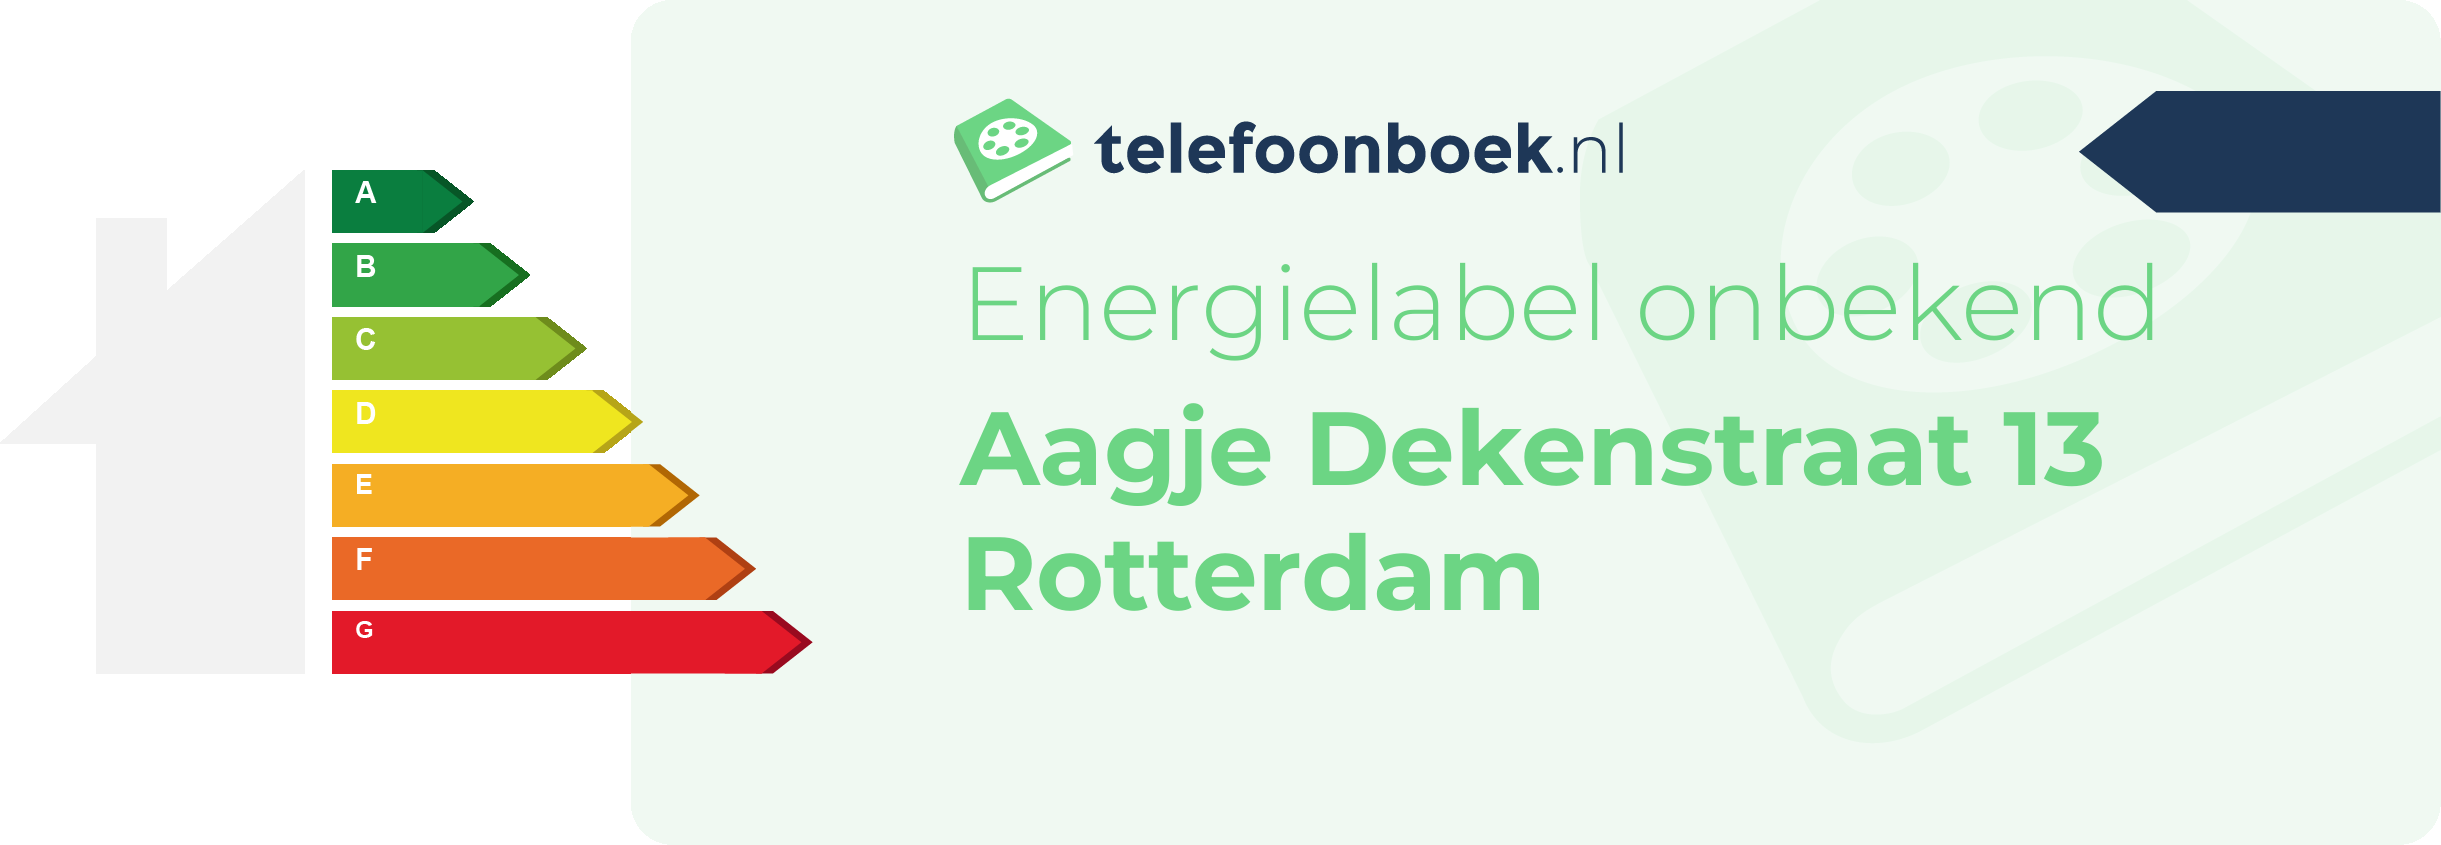 Energielabel Aagje Dekenstraat 13 Rotterdam